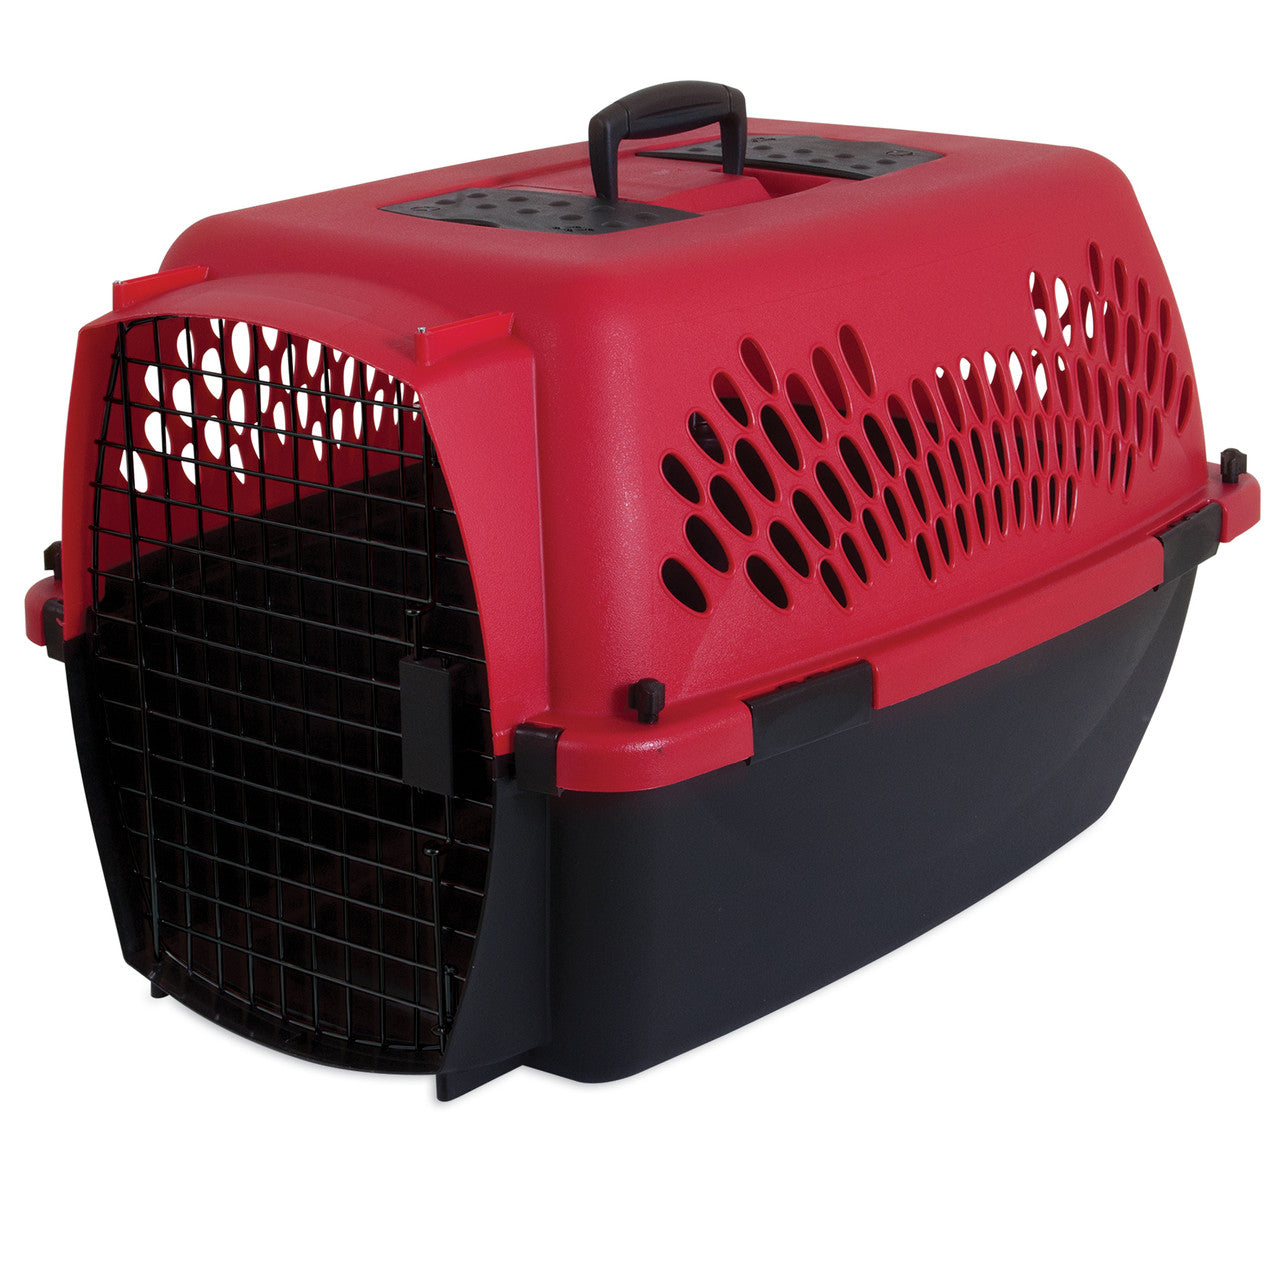 Aspen Fashion Pet Porter Dog Kennel Hard-Sided Deep Red, Black 26 in